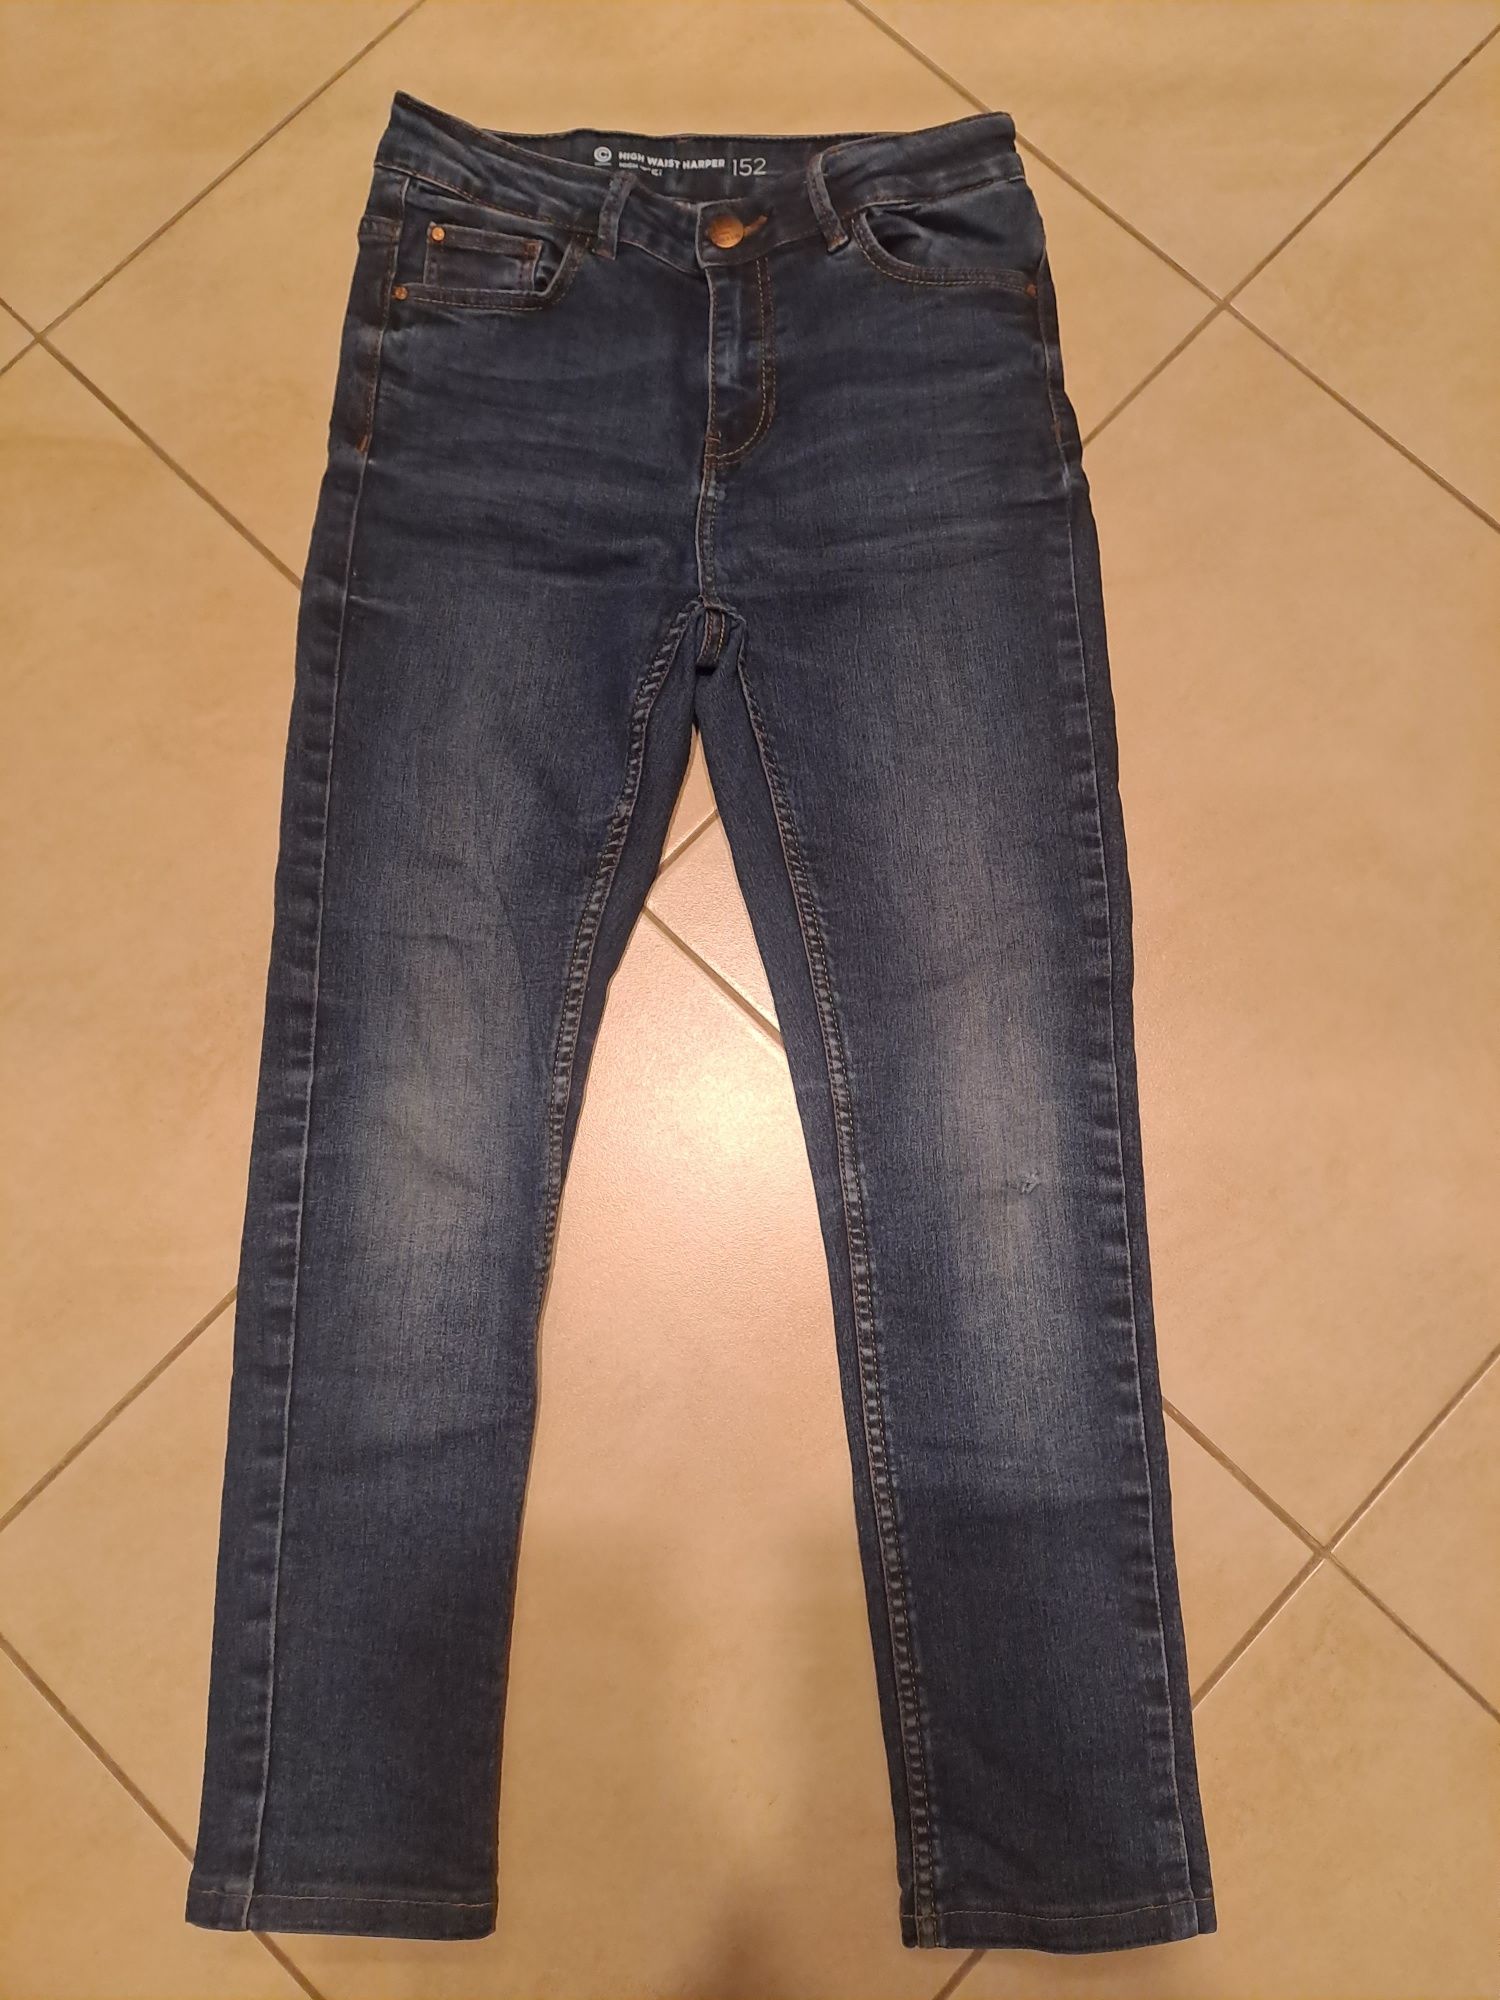 Spodnie jeansy Cubus rozmiar 152